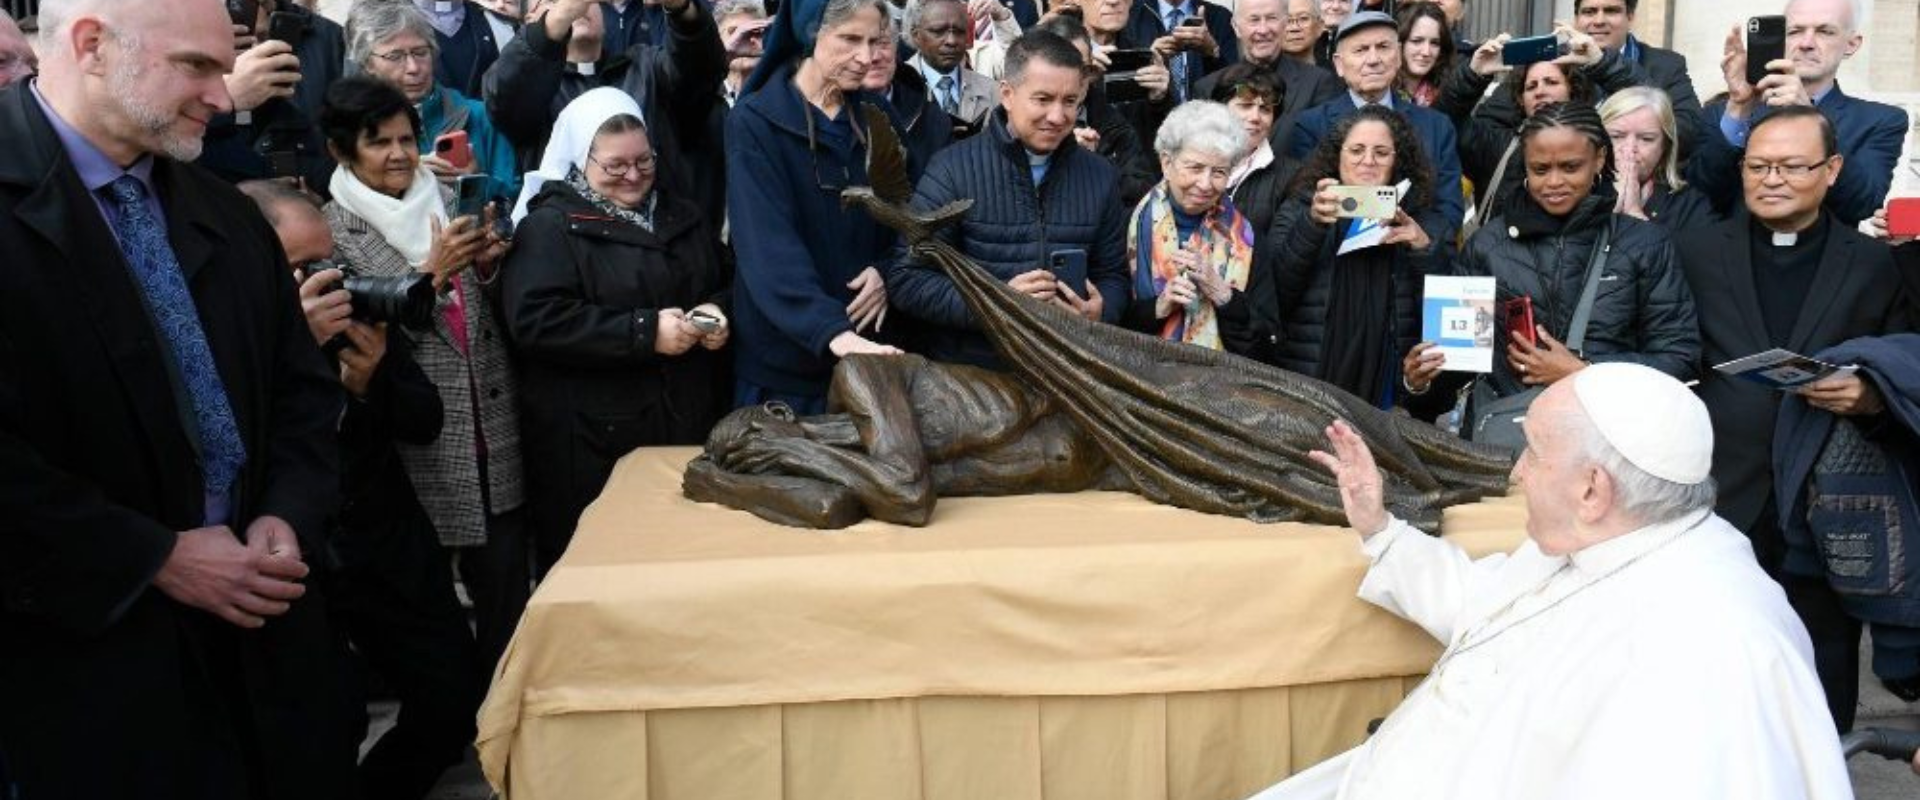 Escultura que convida o mundo a cuidar dos sem-teto é abençoada pelo Papa